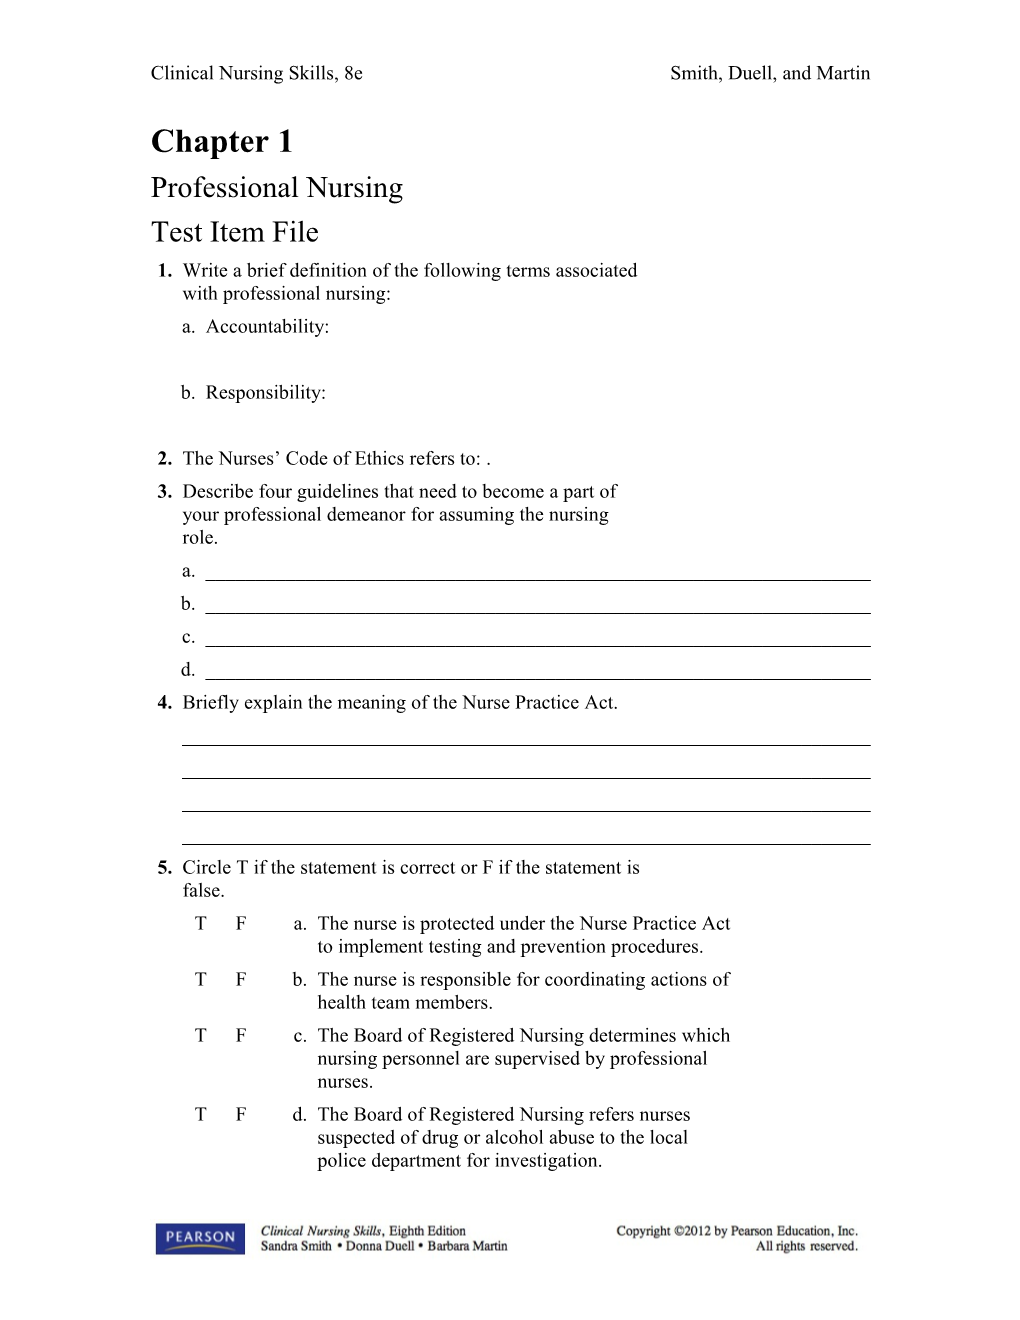 Clinical Nursing Skills, 8Esmith, Duell, and Martin